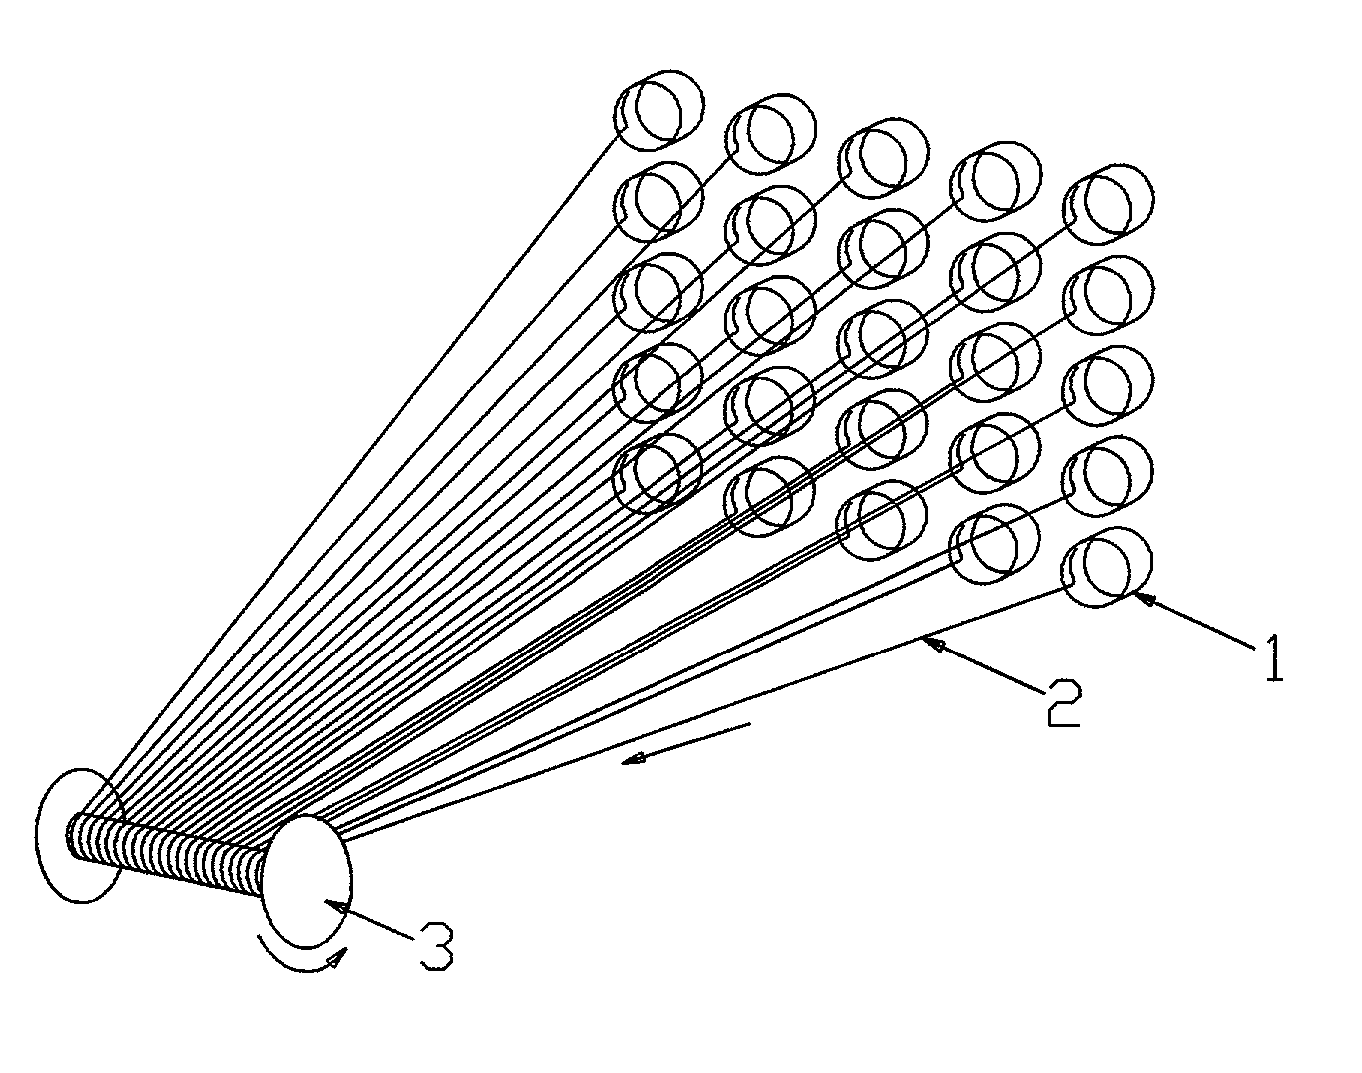 Process for making a warp beam of untwisted fiberglass strands